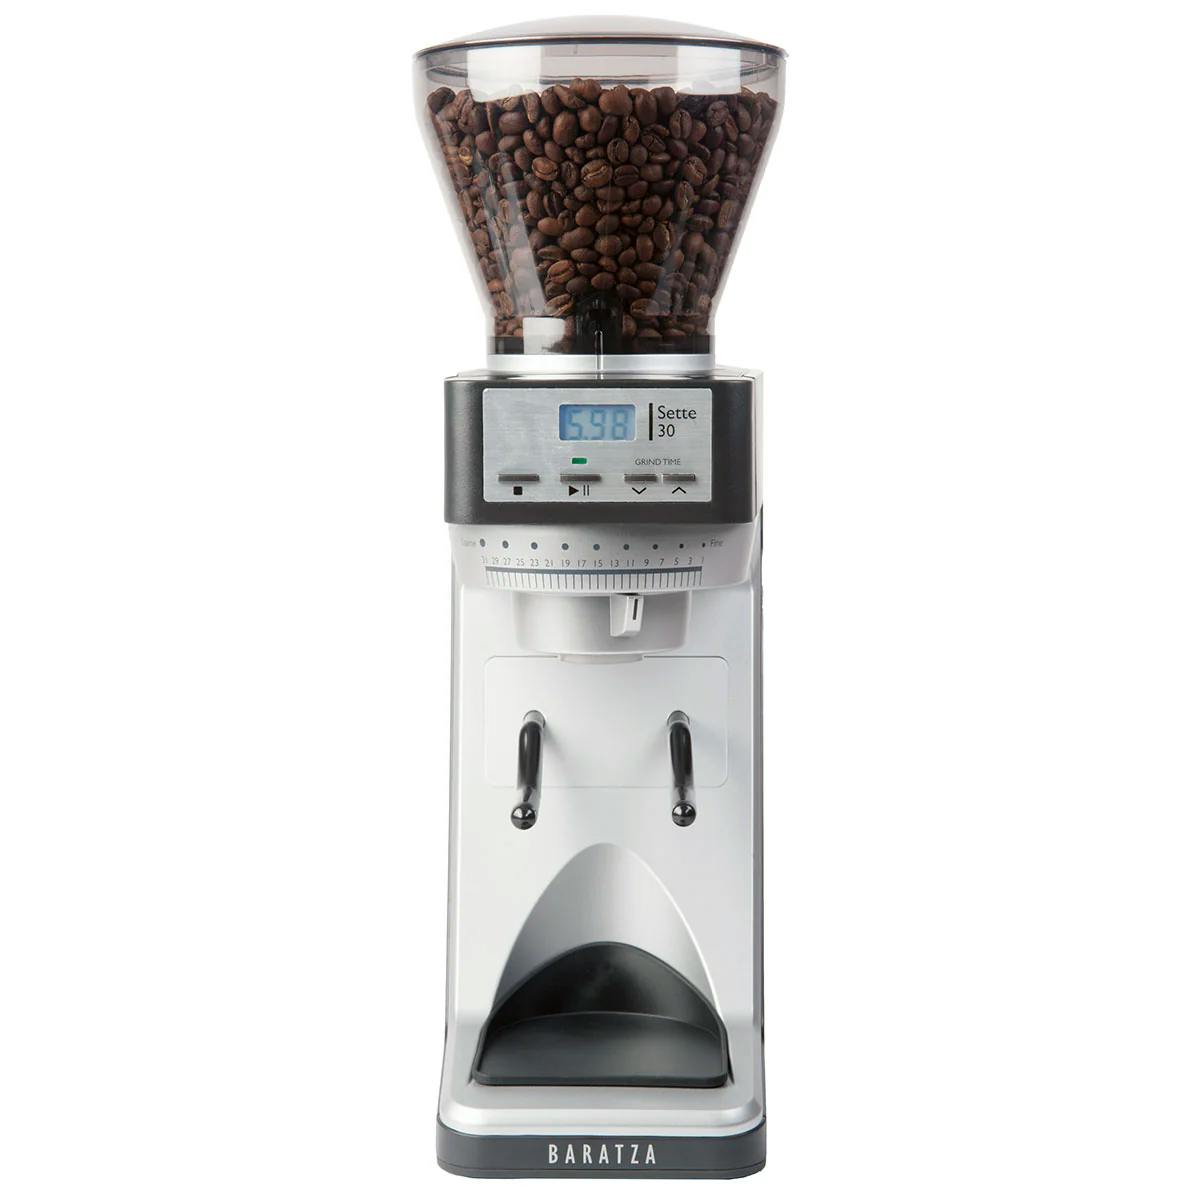 Baratza Sette 30 Coffee & Espresso Grinder